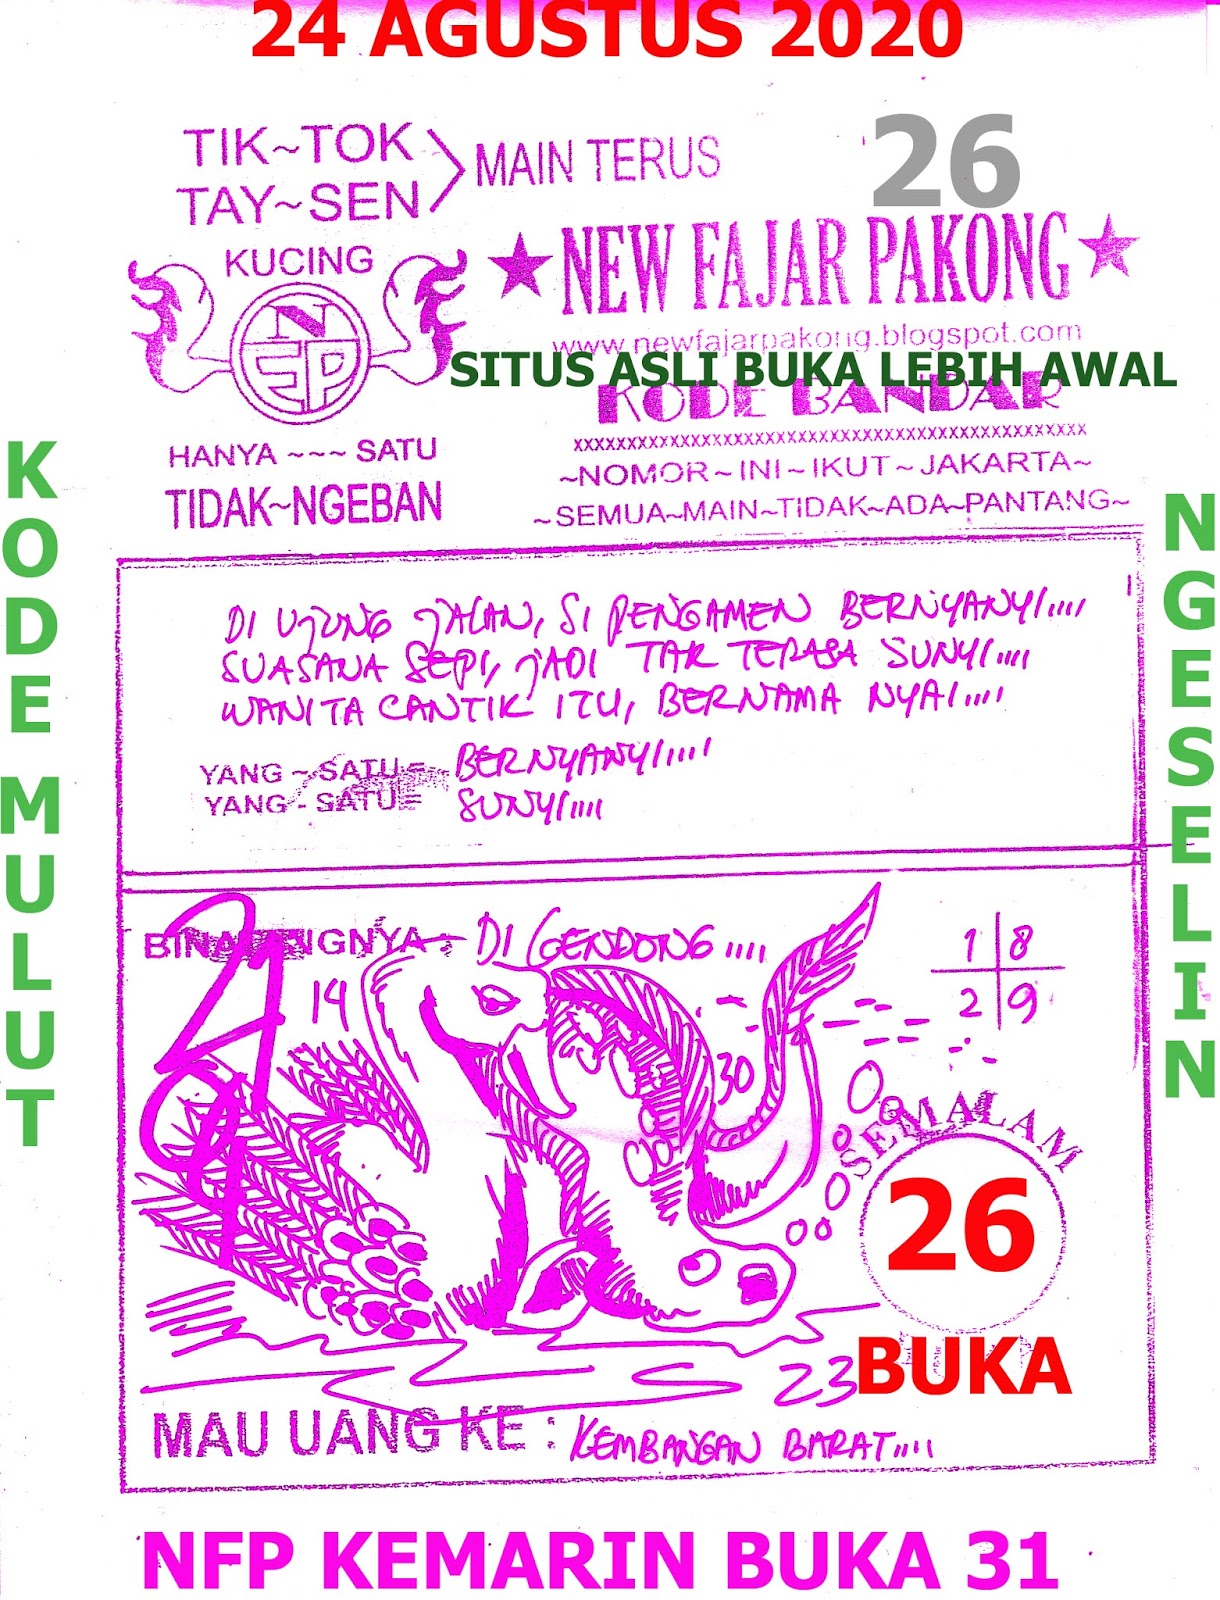 ॵ Syair batik hk 24 agustus 2020  ᙘᙘ 